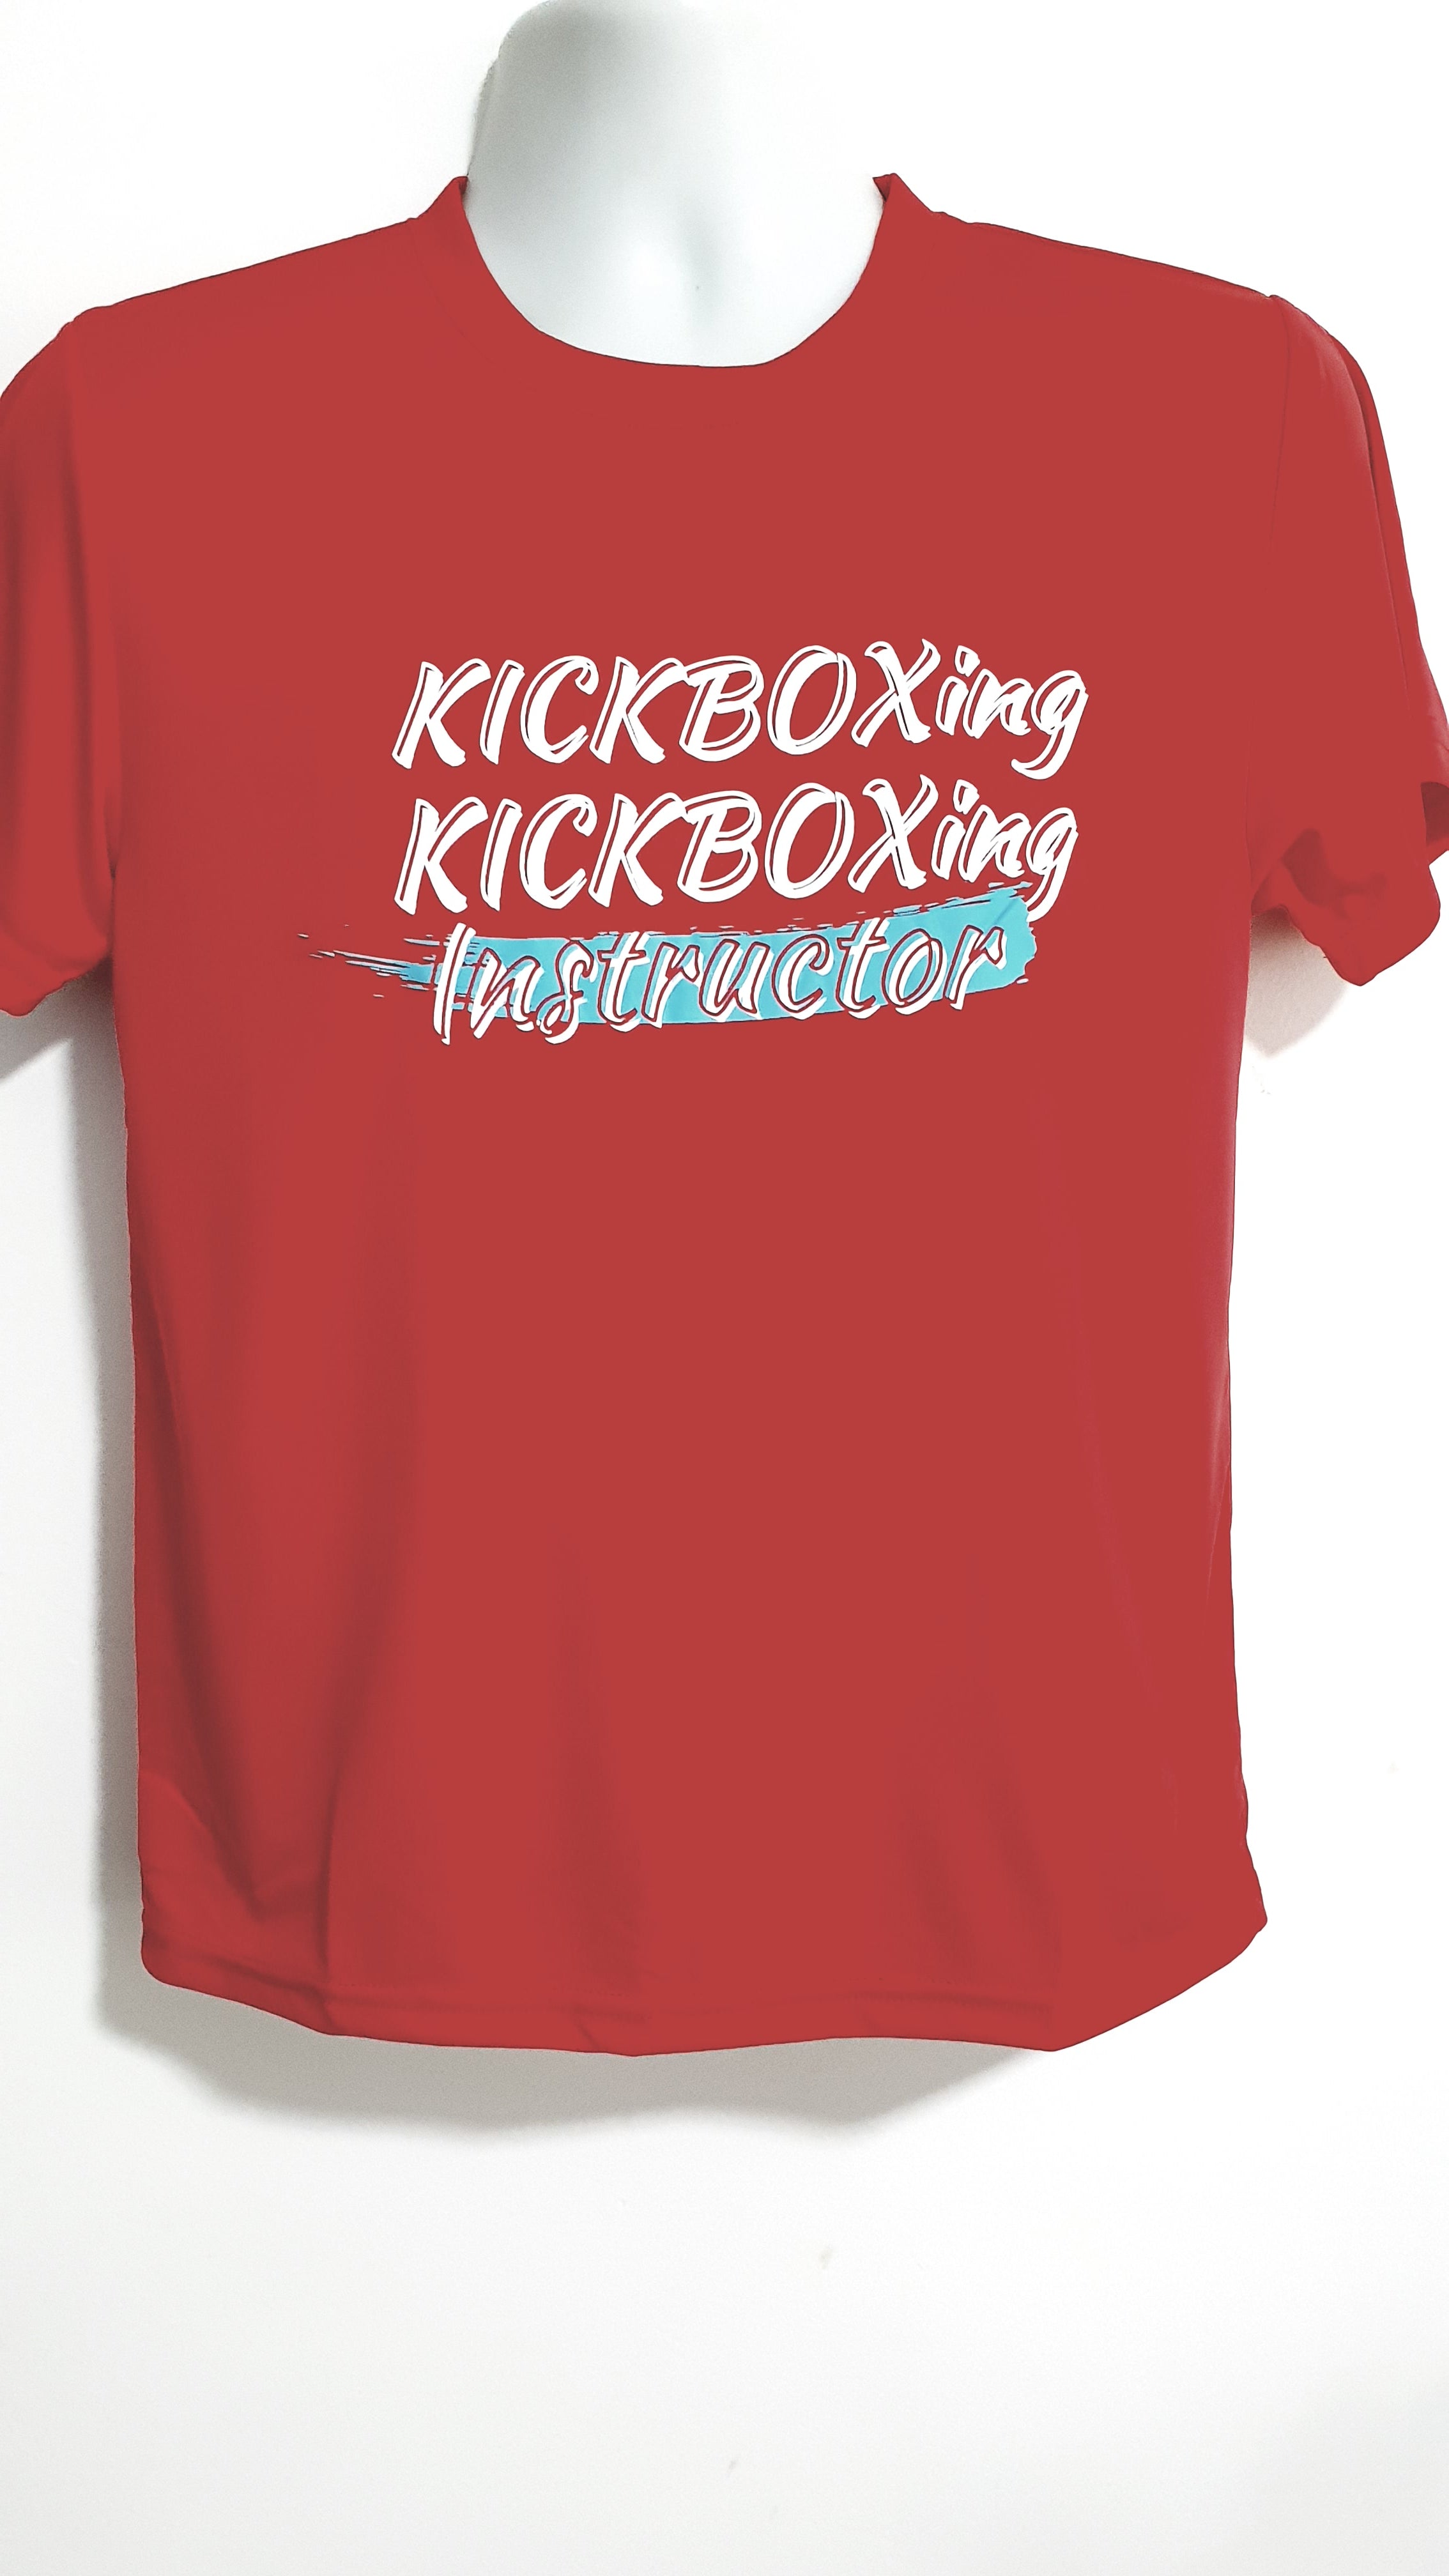 Kickbox Instructors printed on Deep Red Dri-Fit sleeve